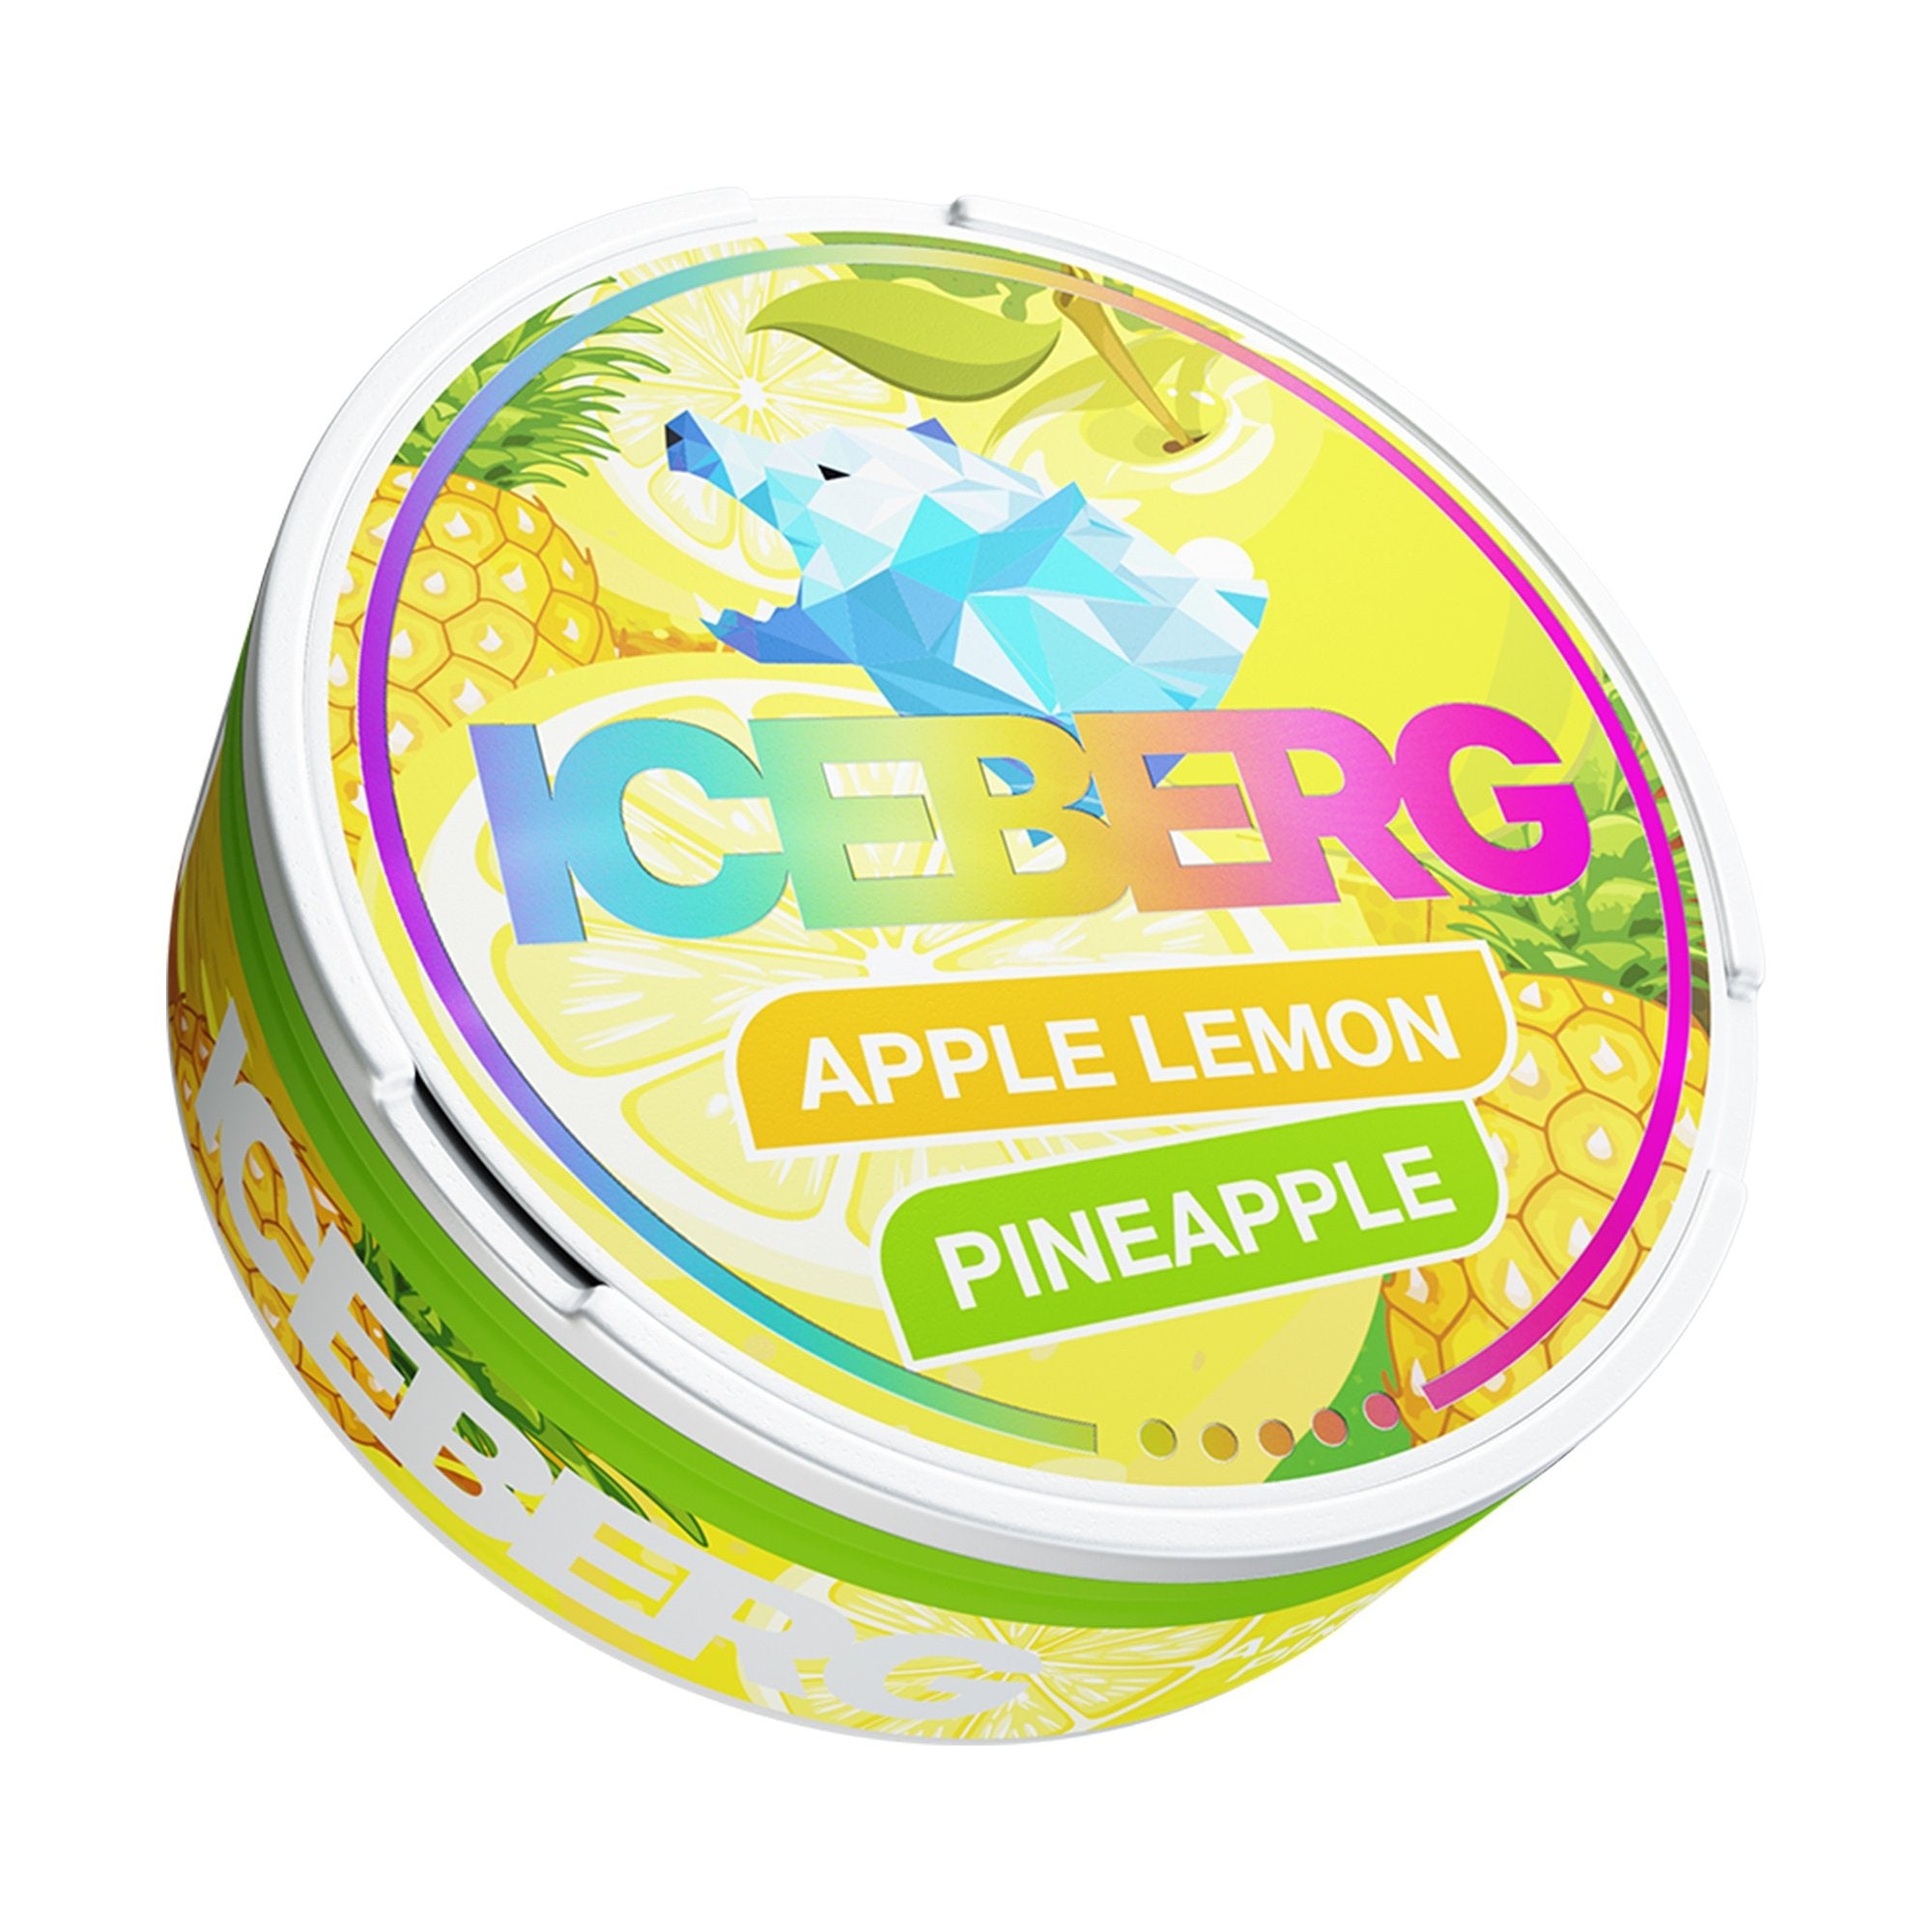 Iceberg Apple Lemon Pineapple - EUK